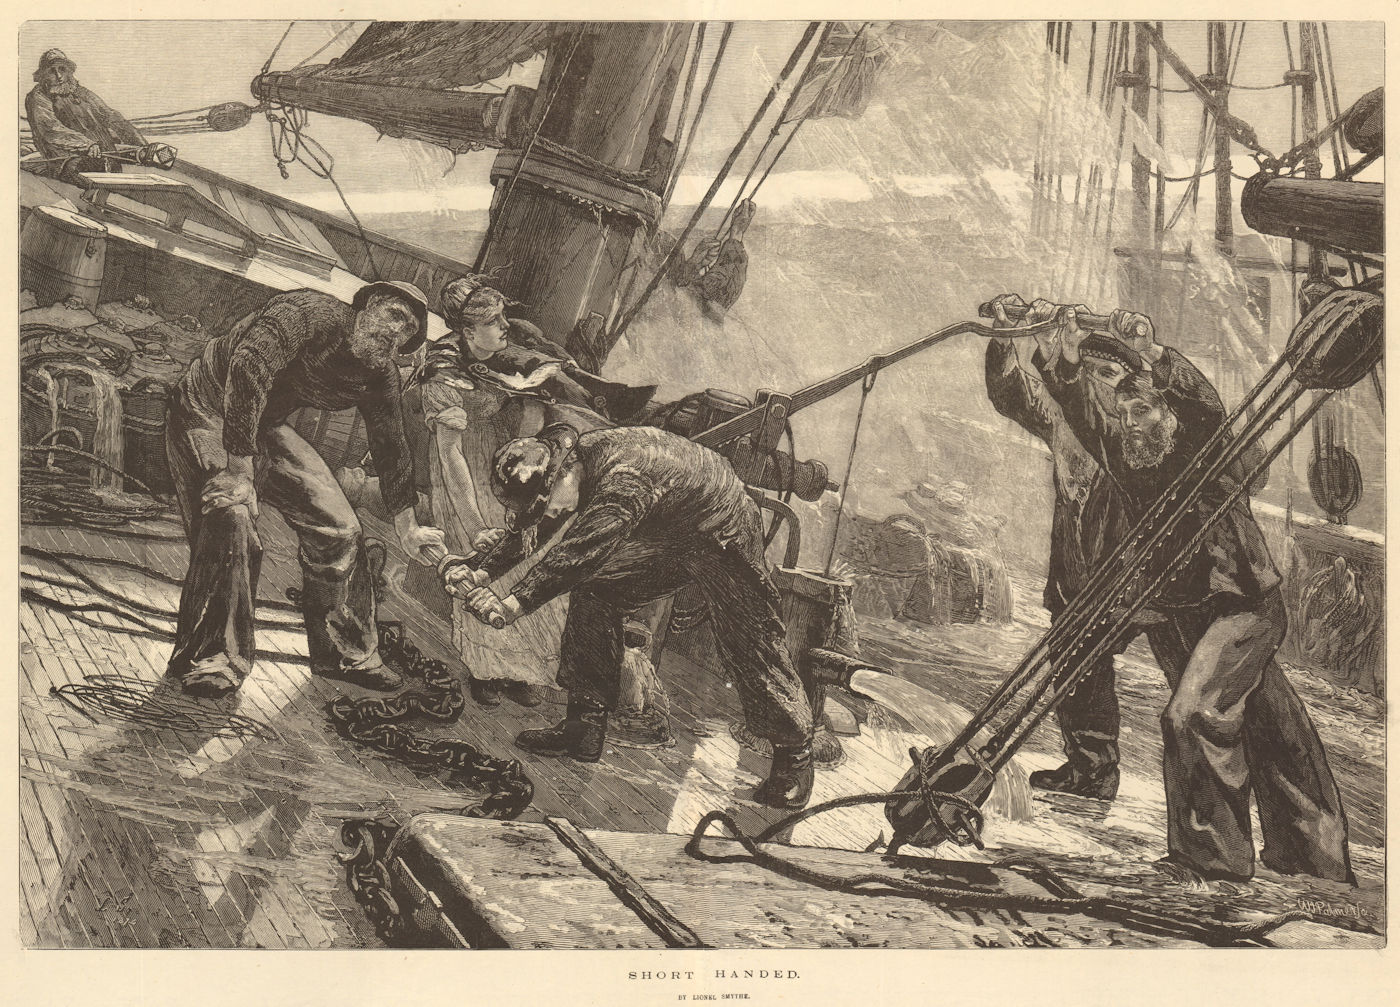 "Short handed", by Lionel Smythe. Ship in a storm 1874 old antique print